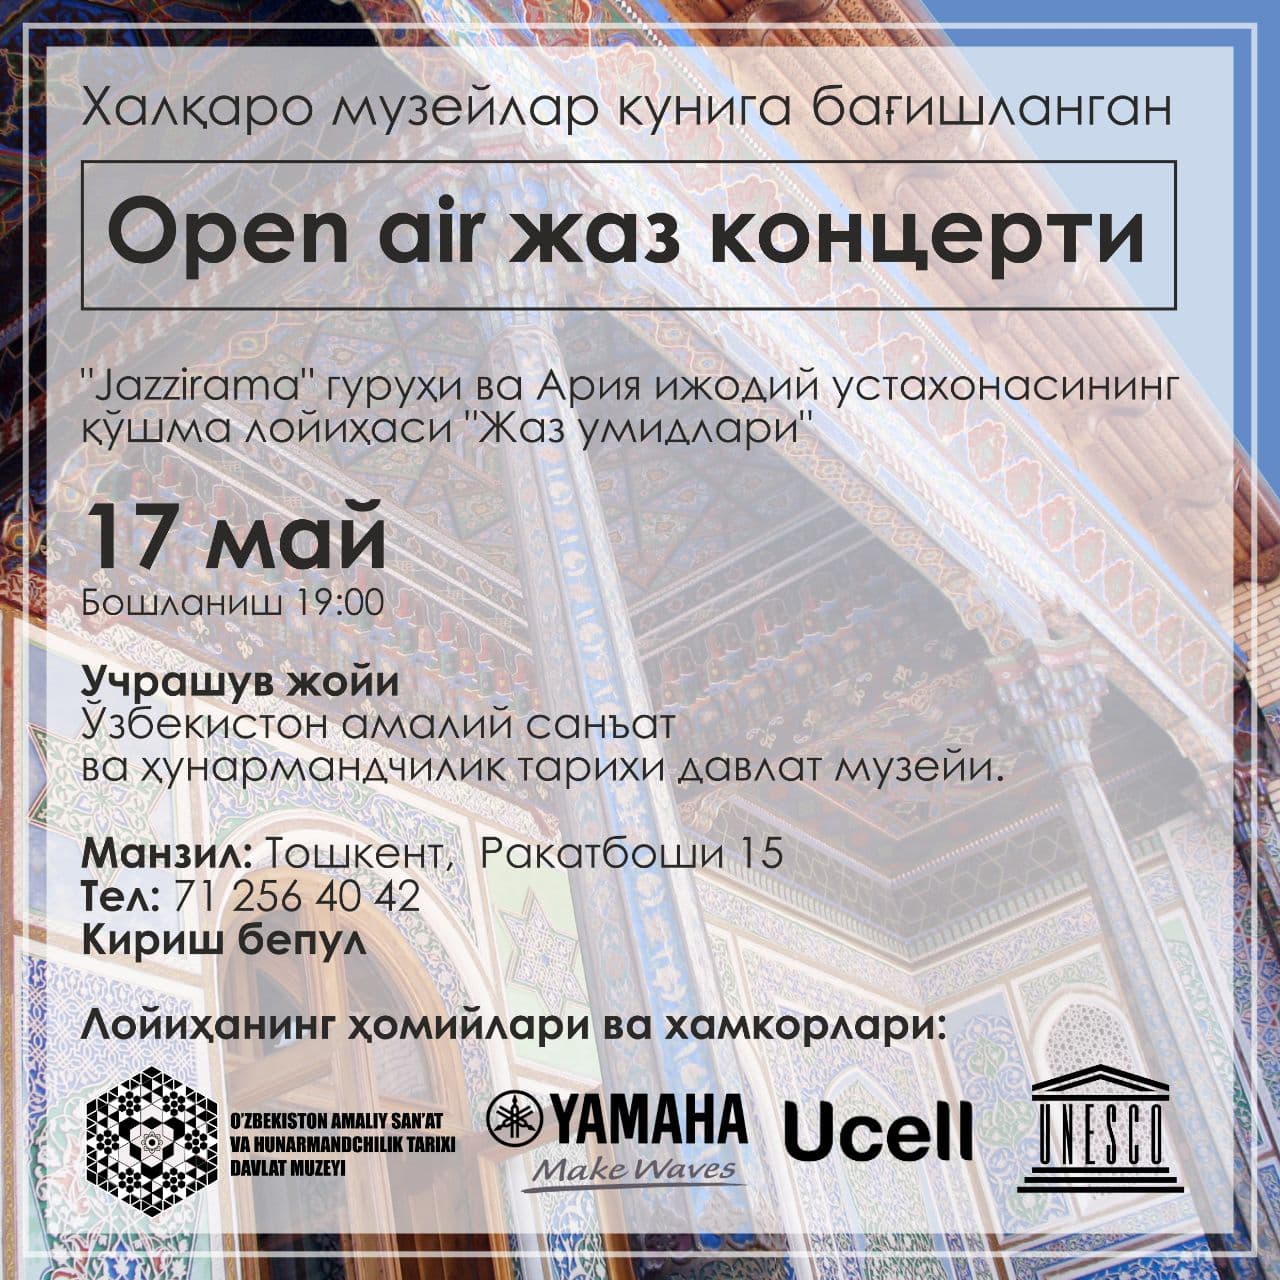 May 18 "International Museum Day".